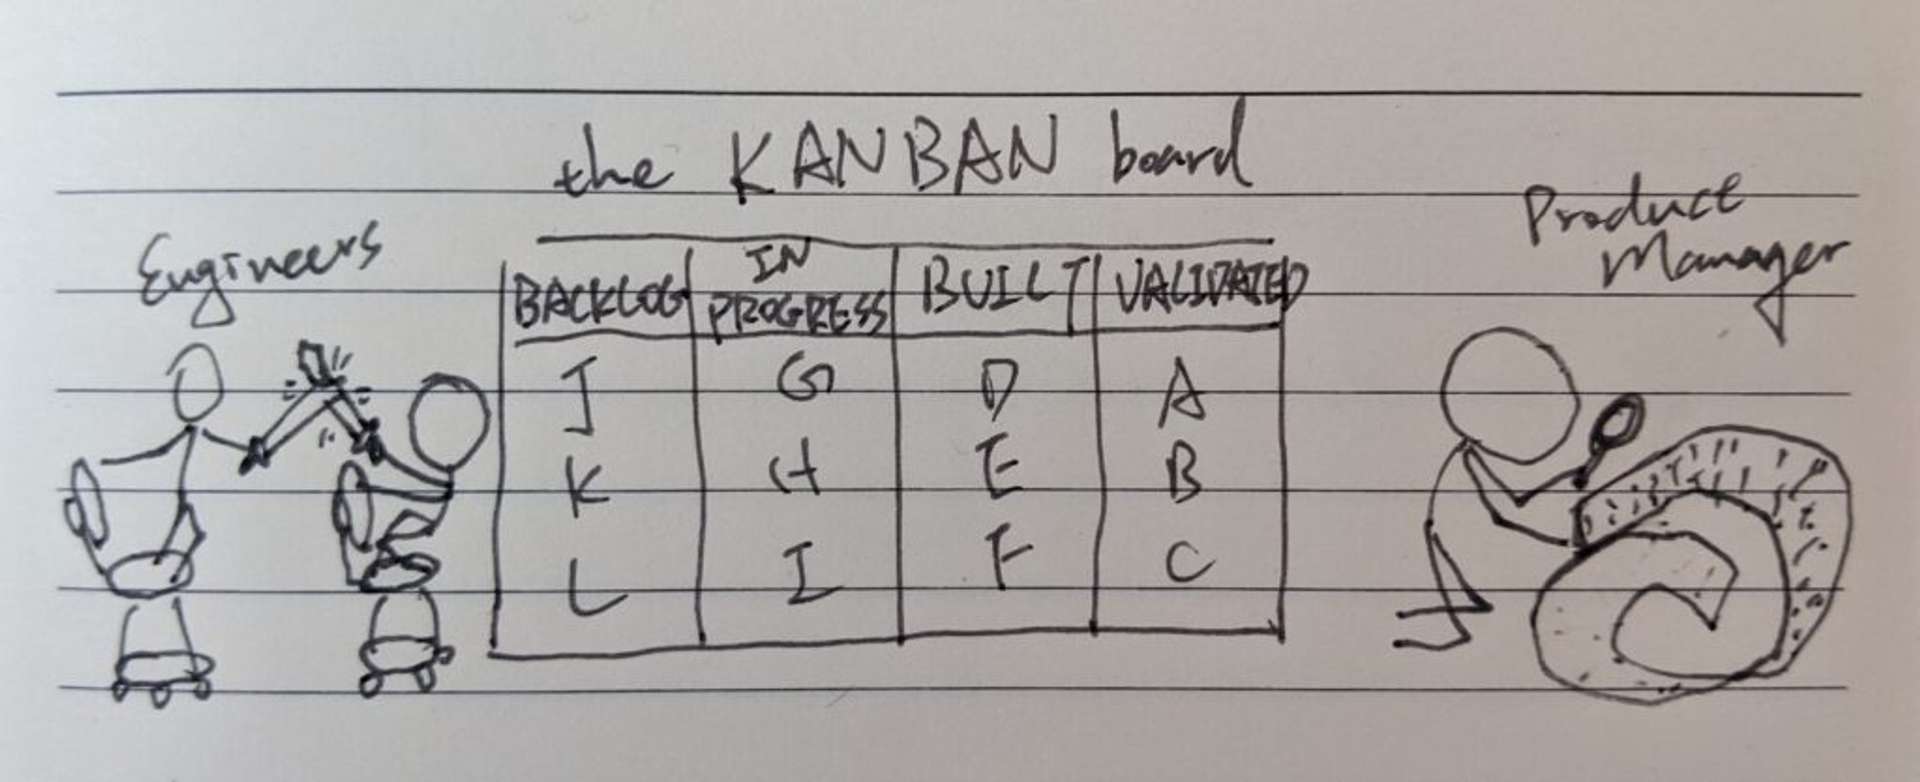 A full Kanban board